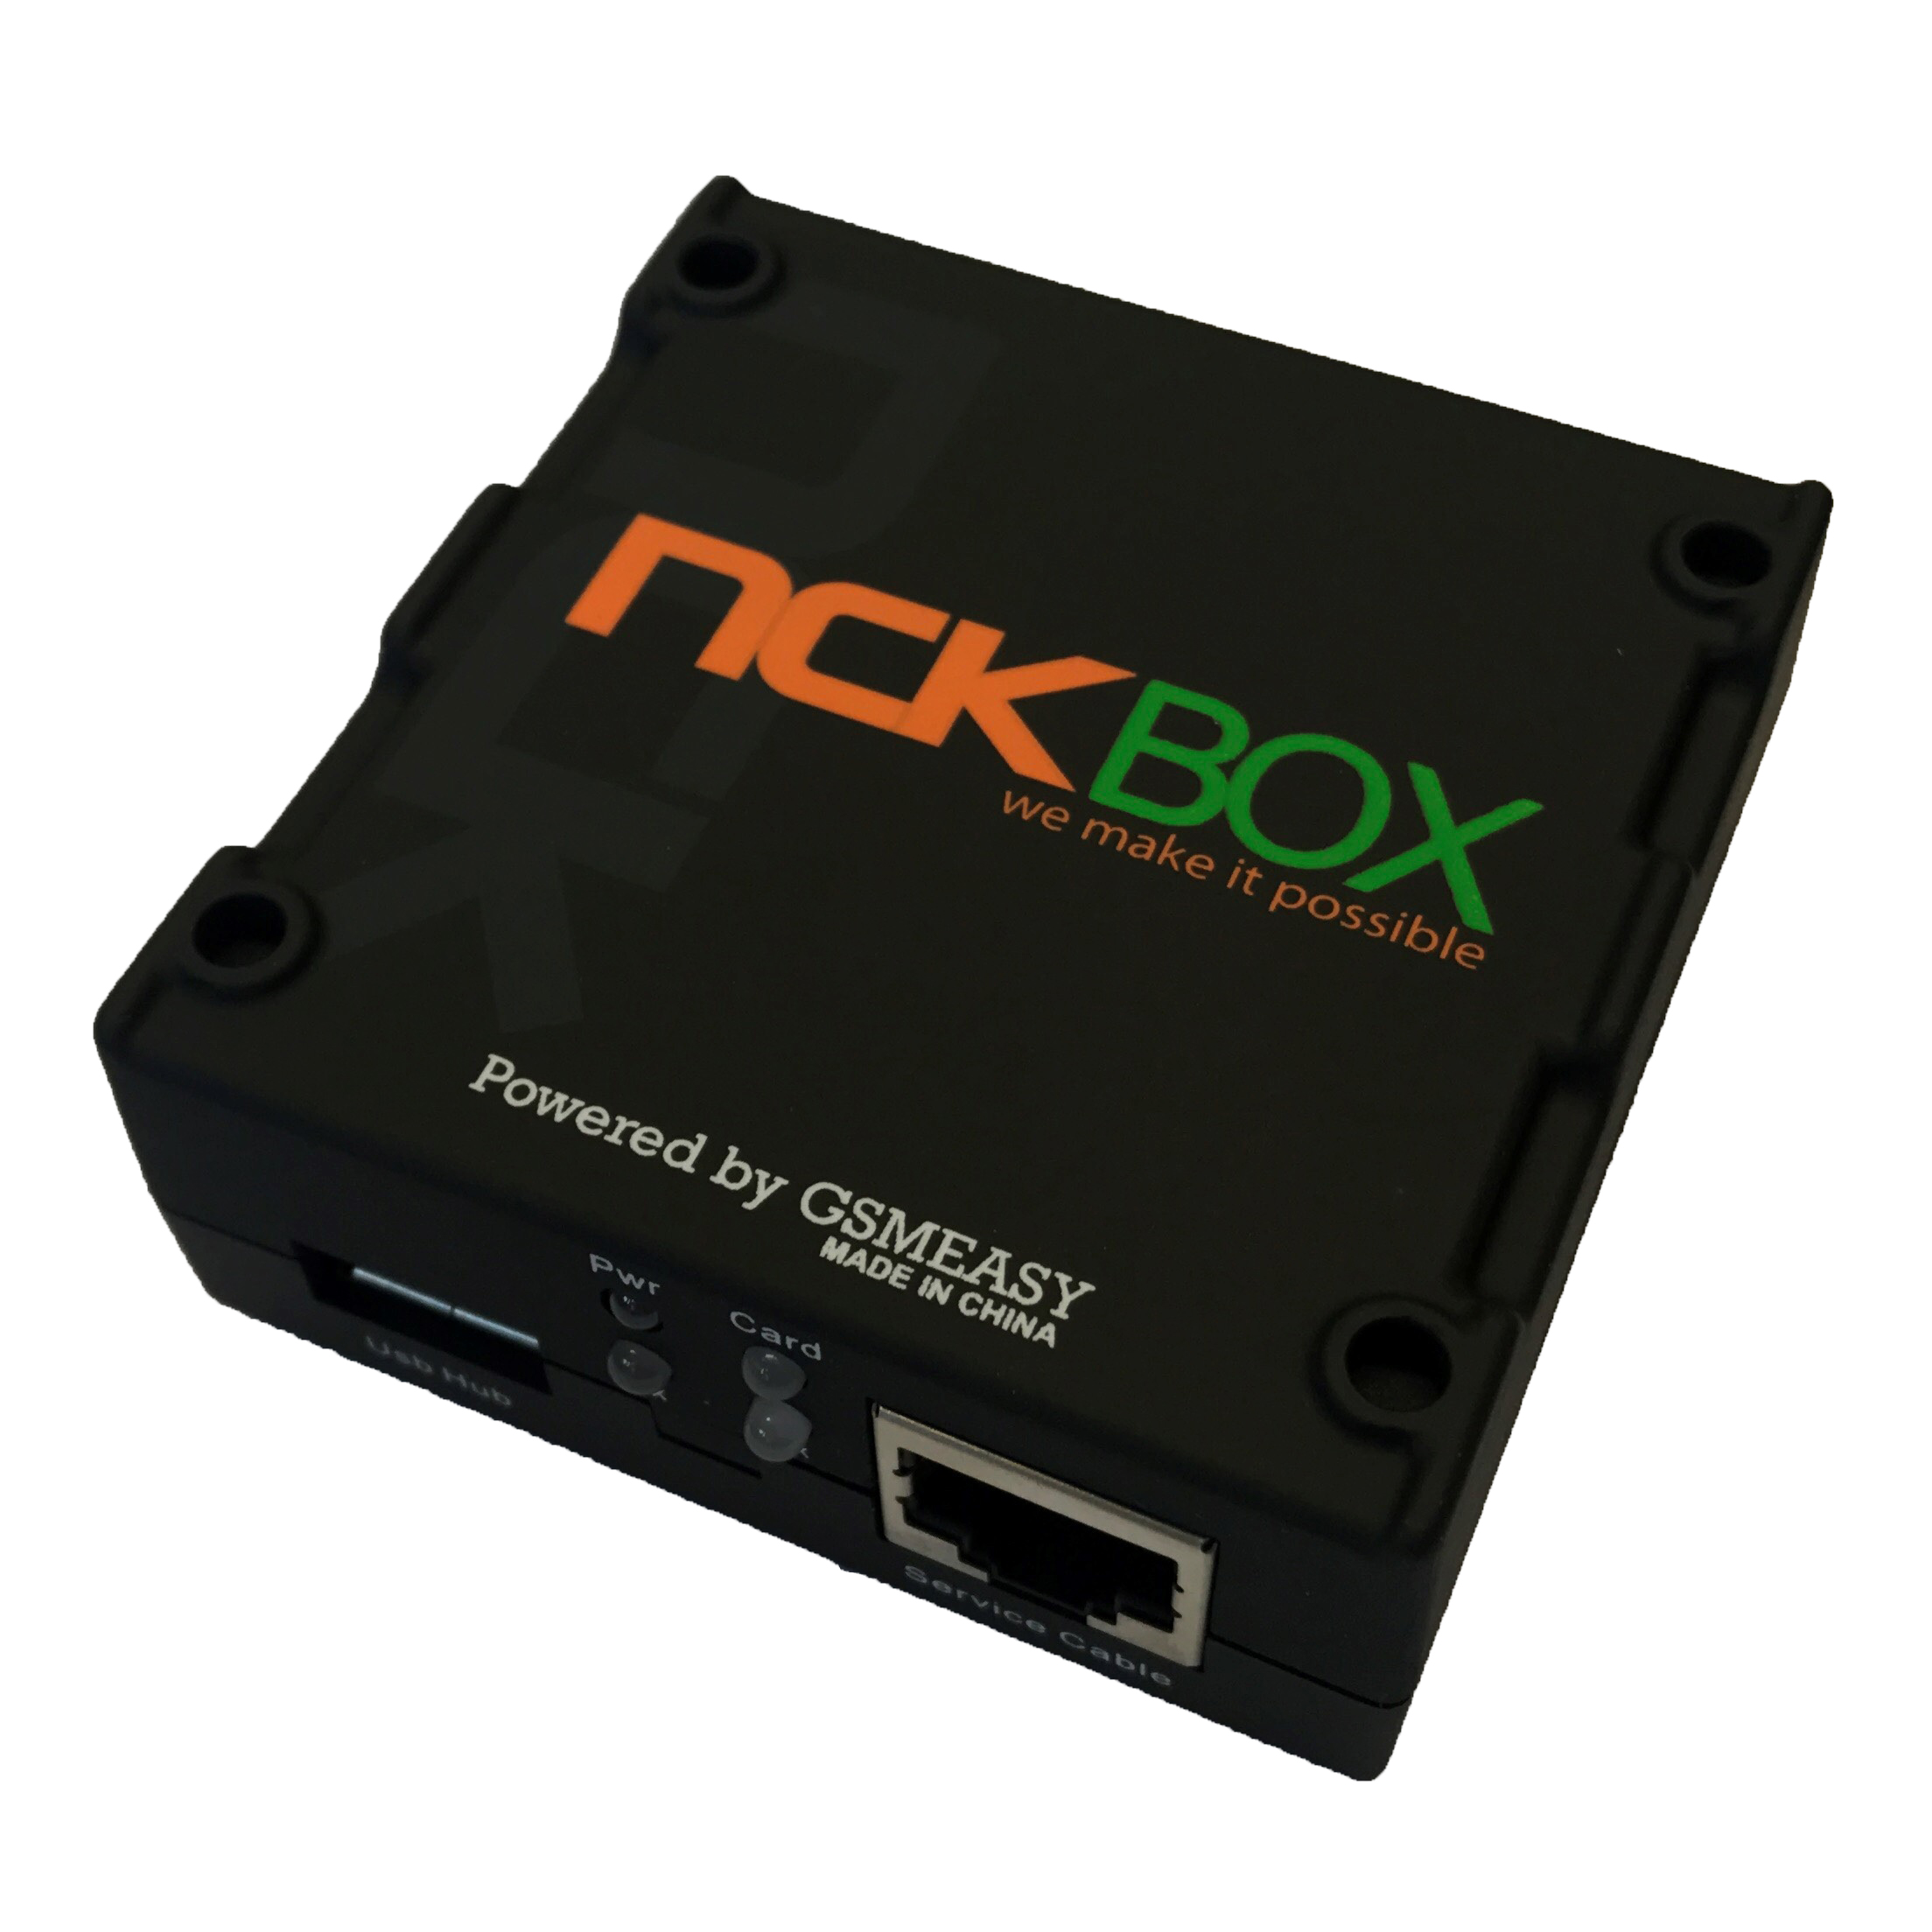 NCK Box / NCK Pro Android MTK v2.0 Update Released – E